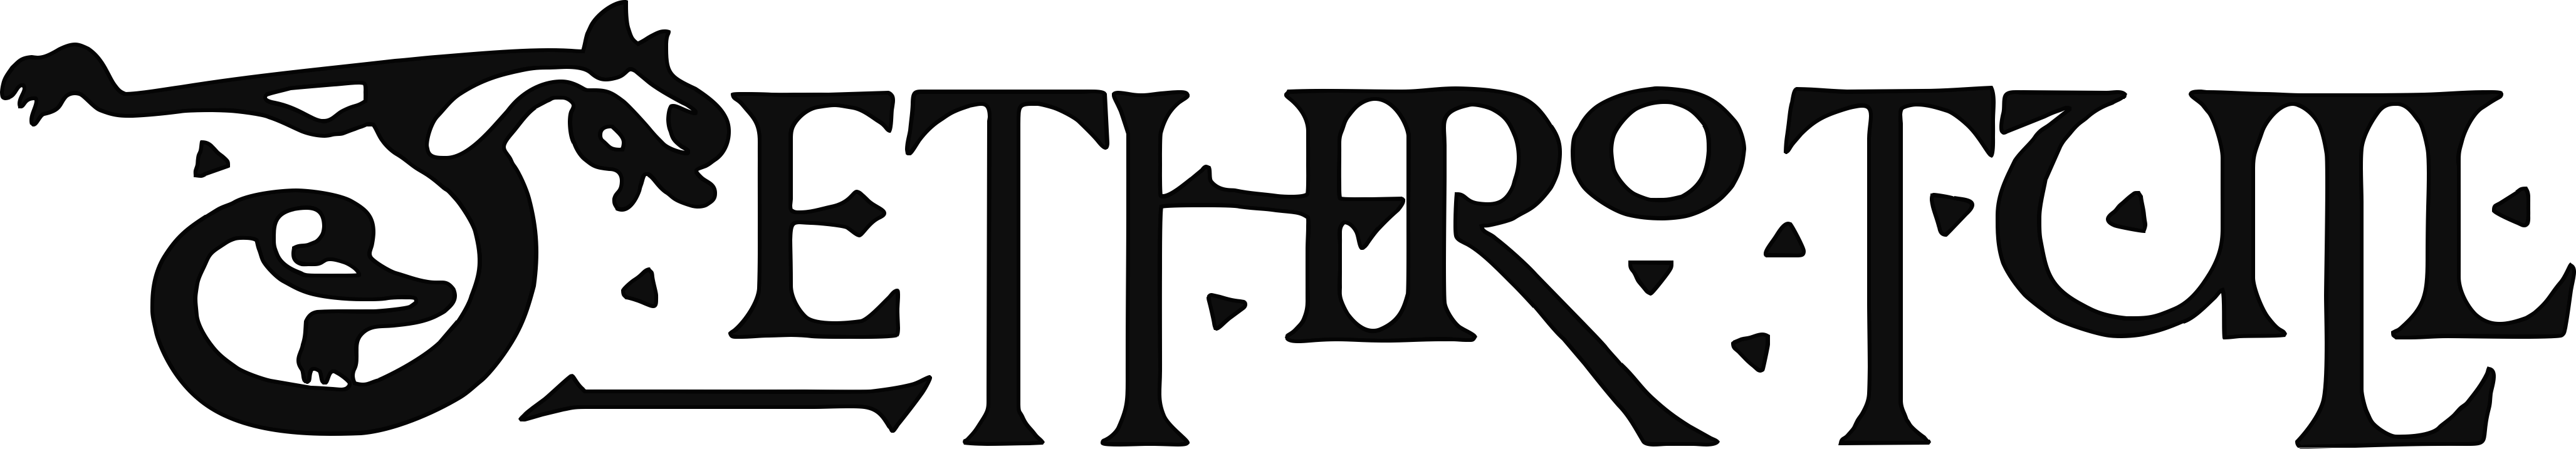 jethro-tull-logo